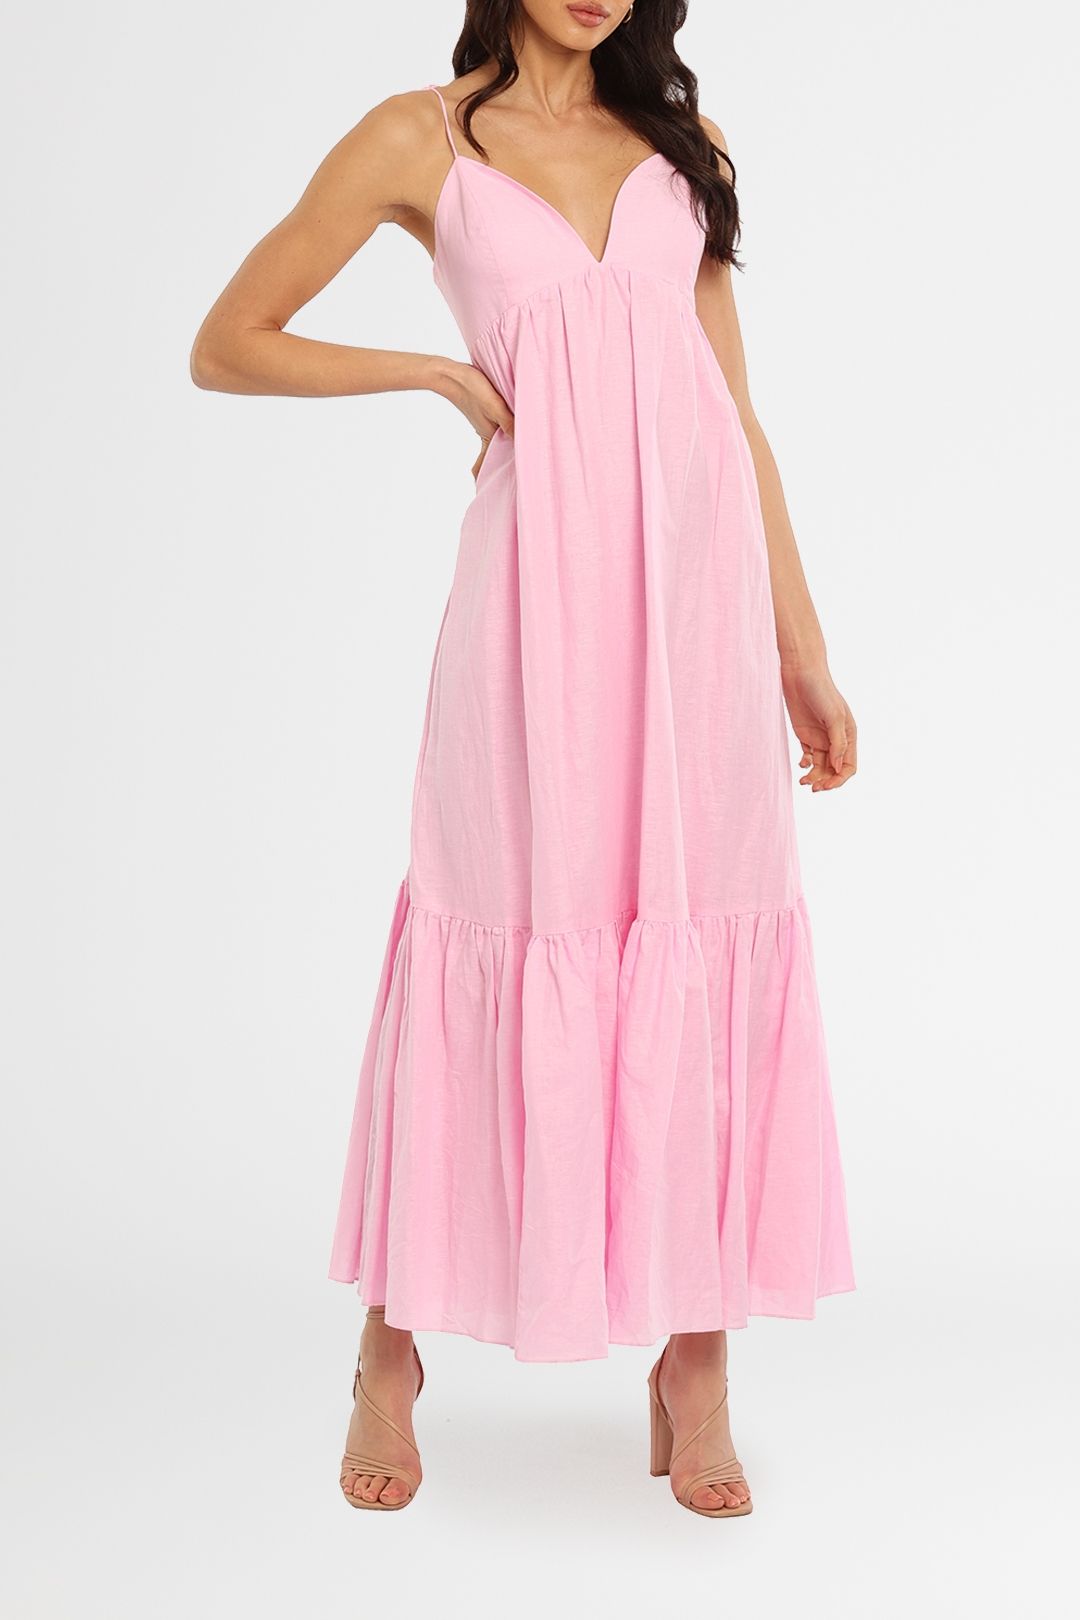 Steele Leonora Dress Pink